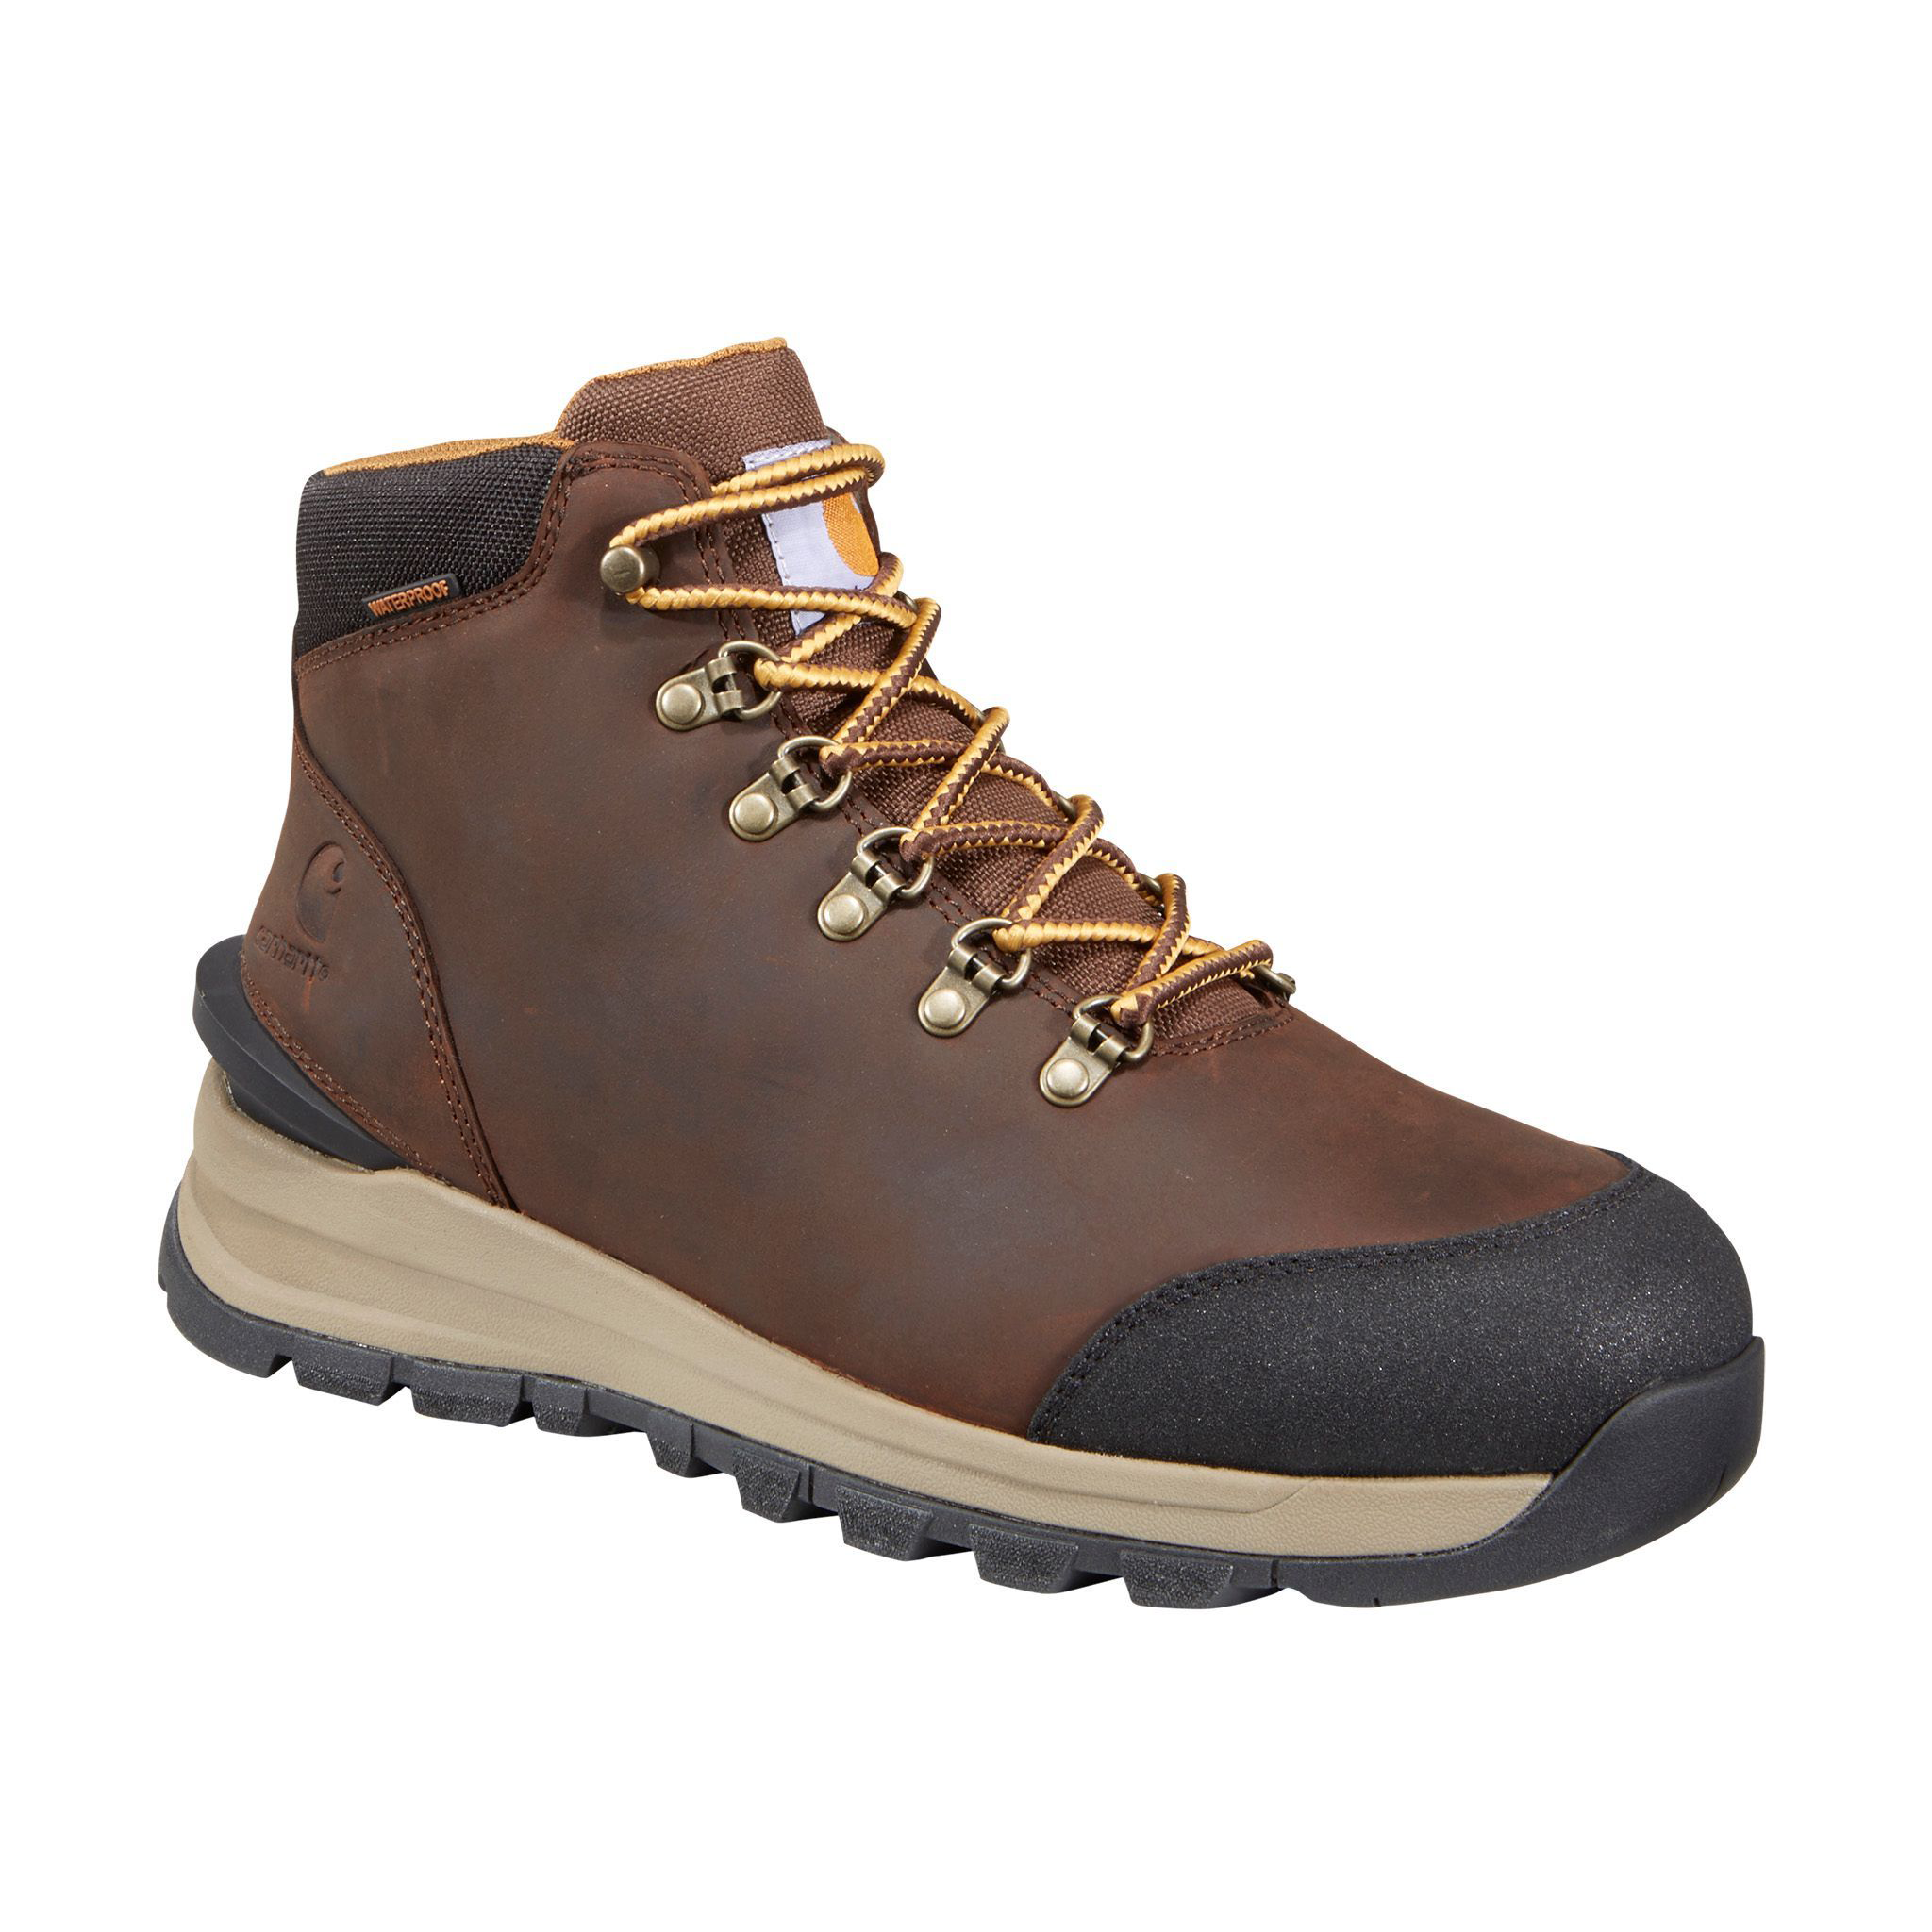 Carhartt Gilmore Waterproof Hiking Boots for Men - Dark Brown Oil Tanned - 12W